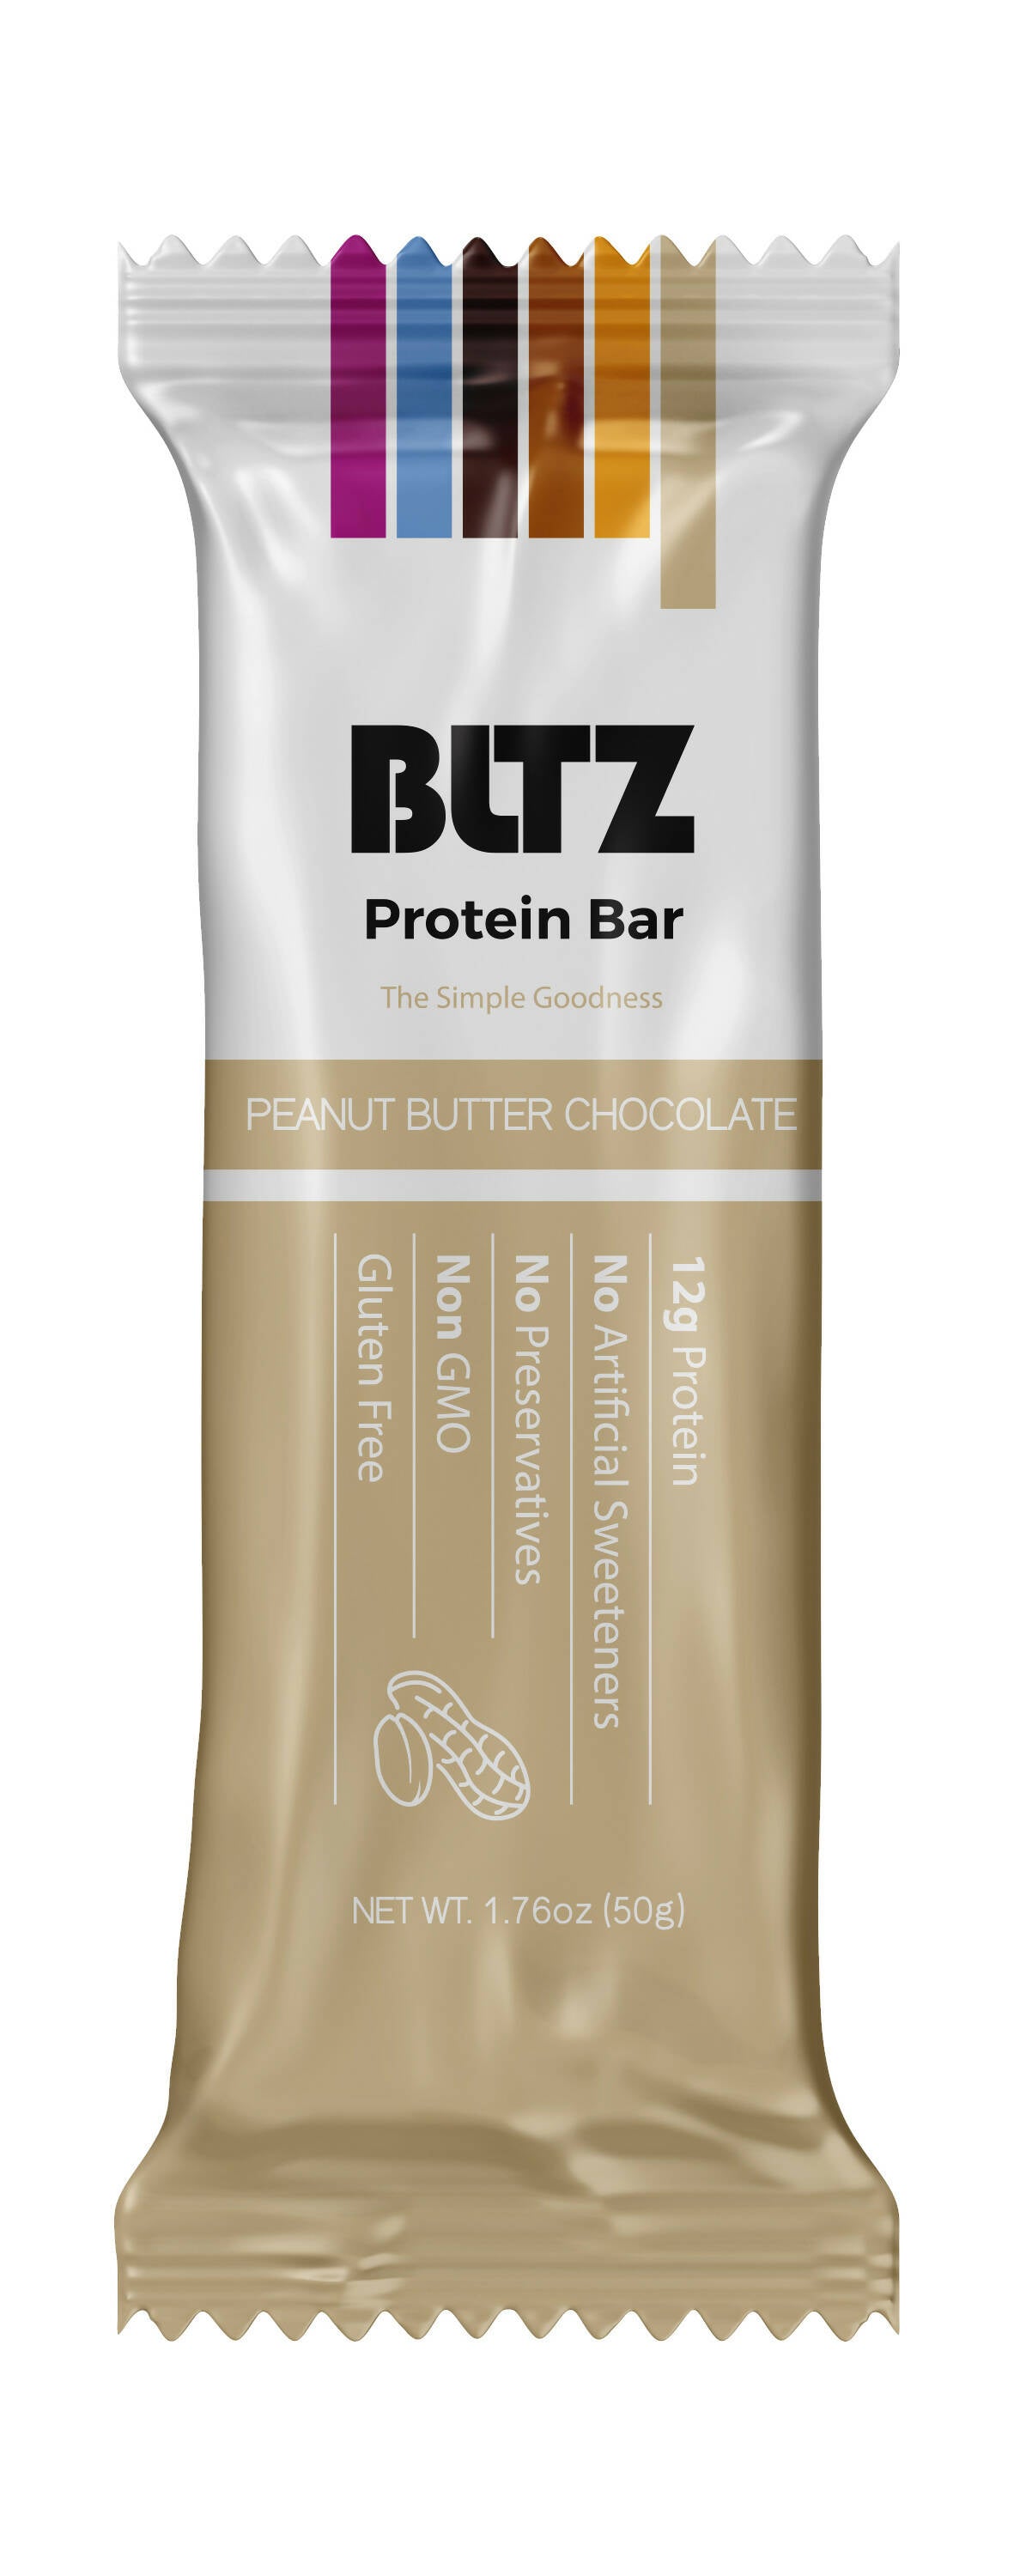 BLTZ Peanut Butter Chocolate Box